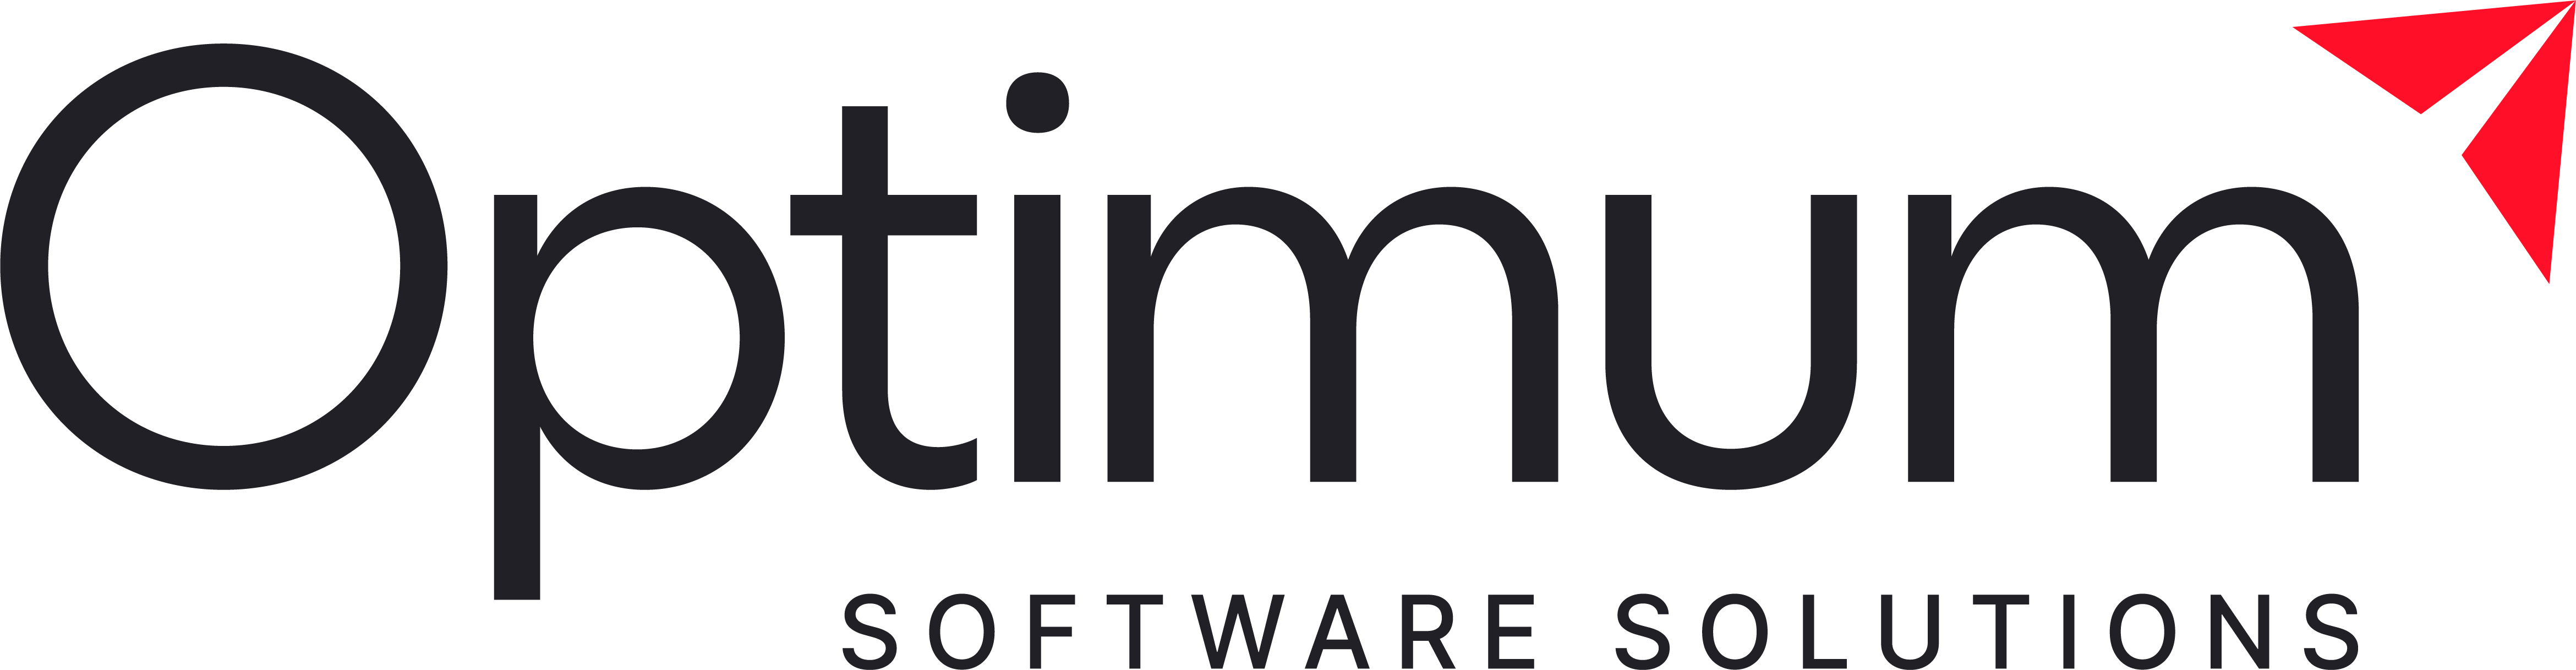 Optimum Software Solutions logo